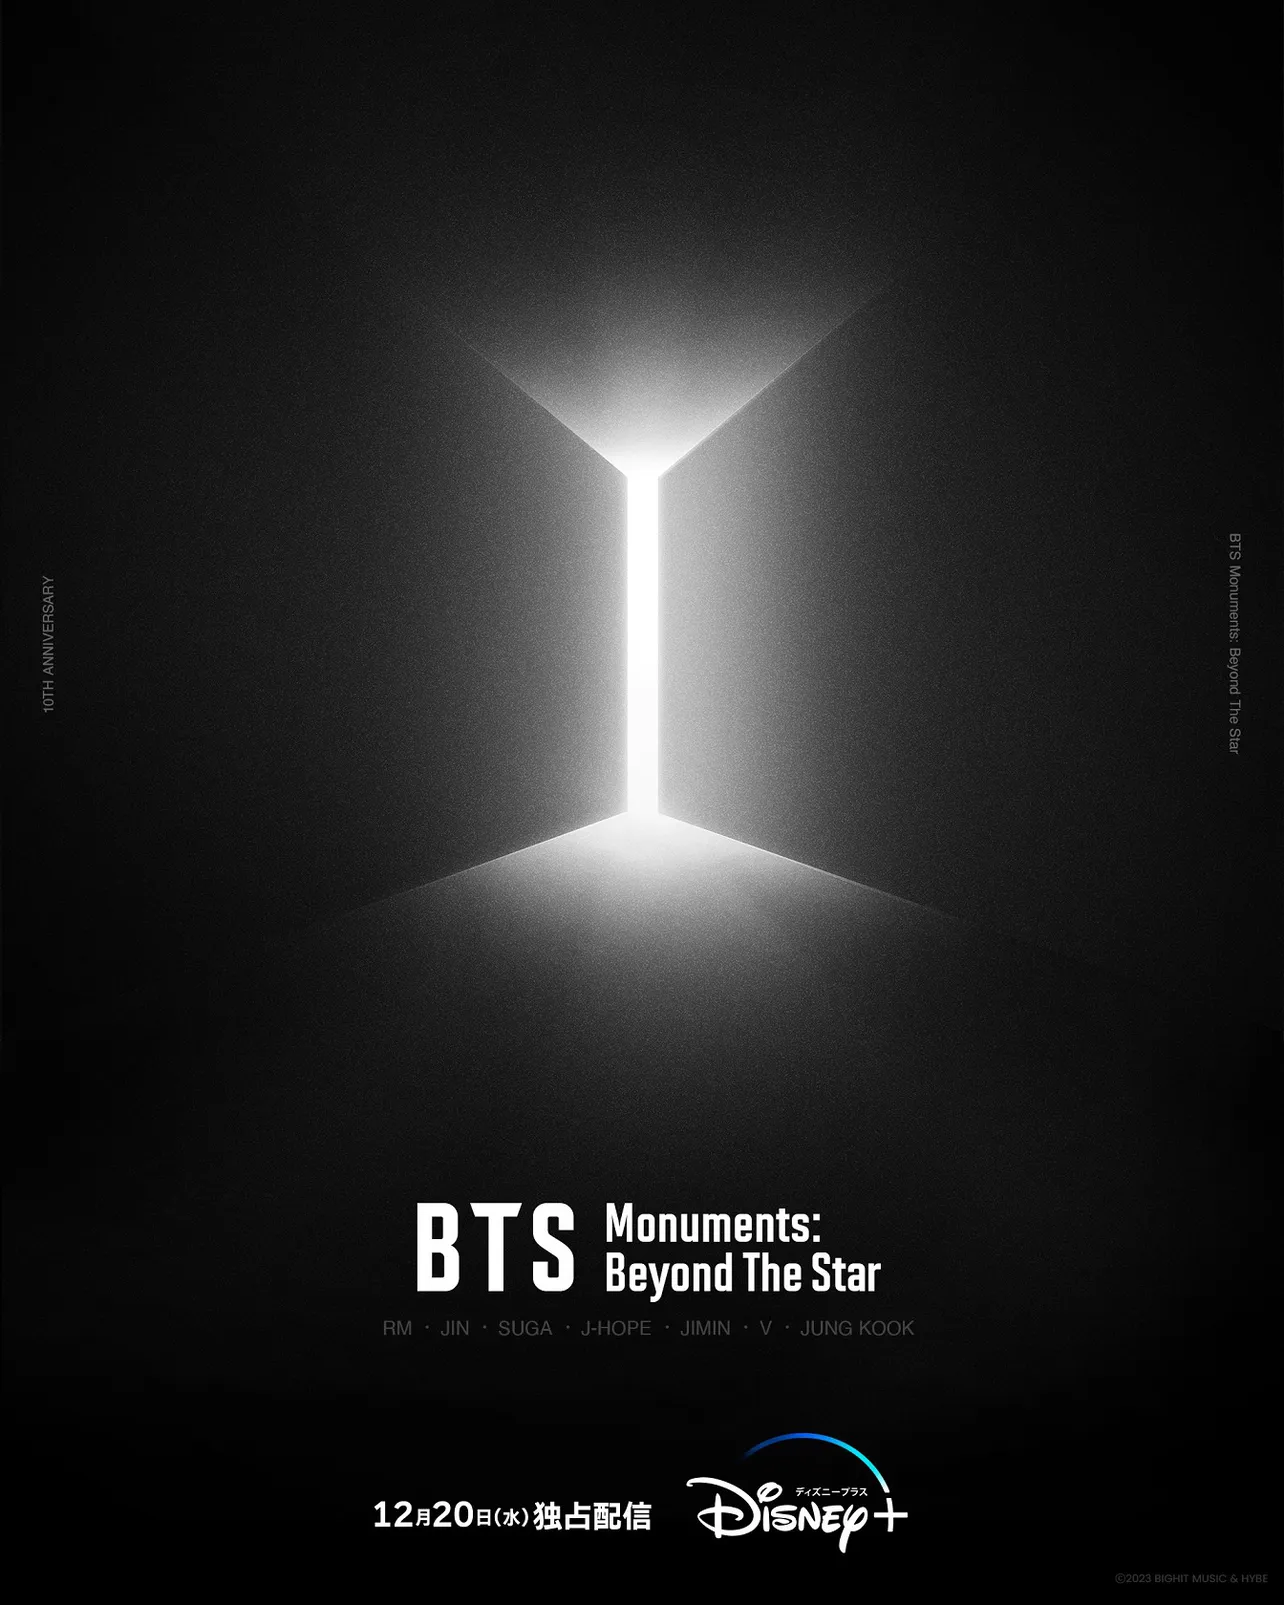 「BTS Monuments: Beyond The Star」ティザーポスター